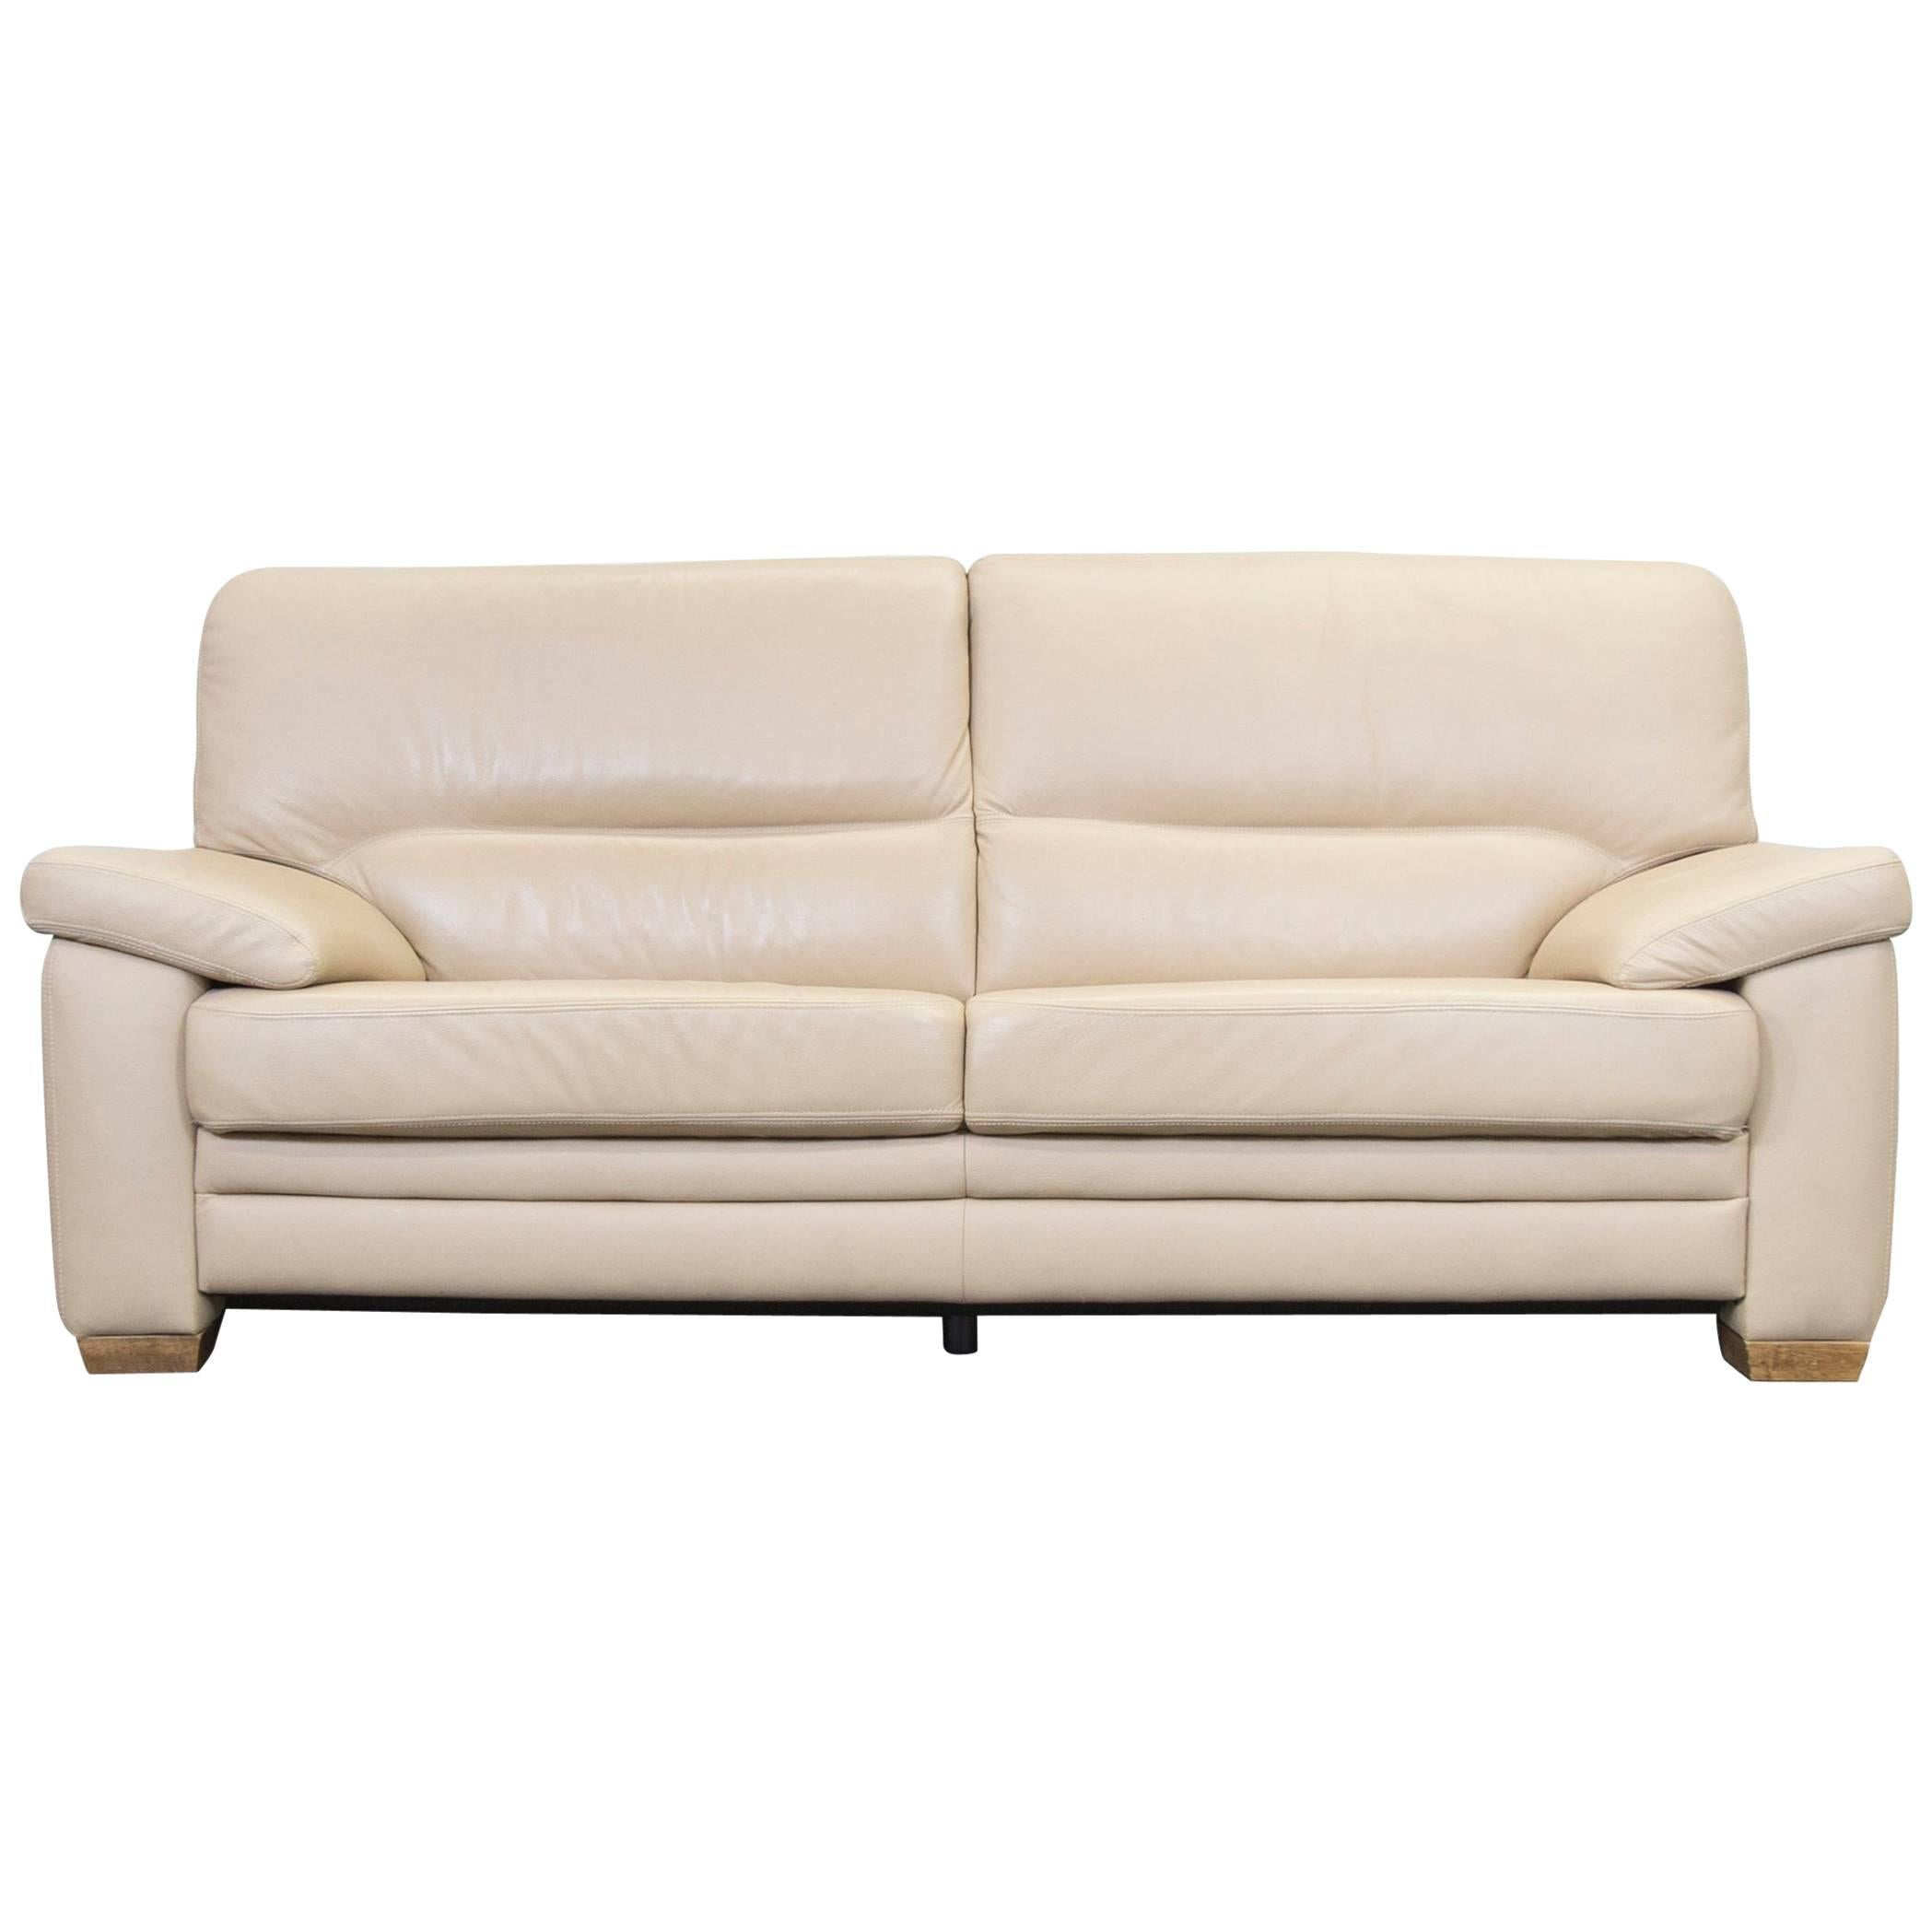 Designer Sofa Beige Leather Three-Seat Couch Modern